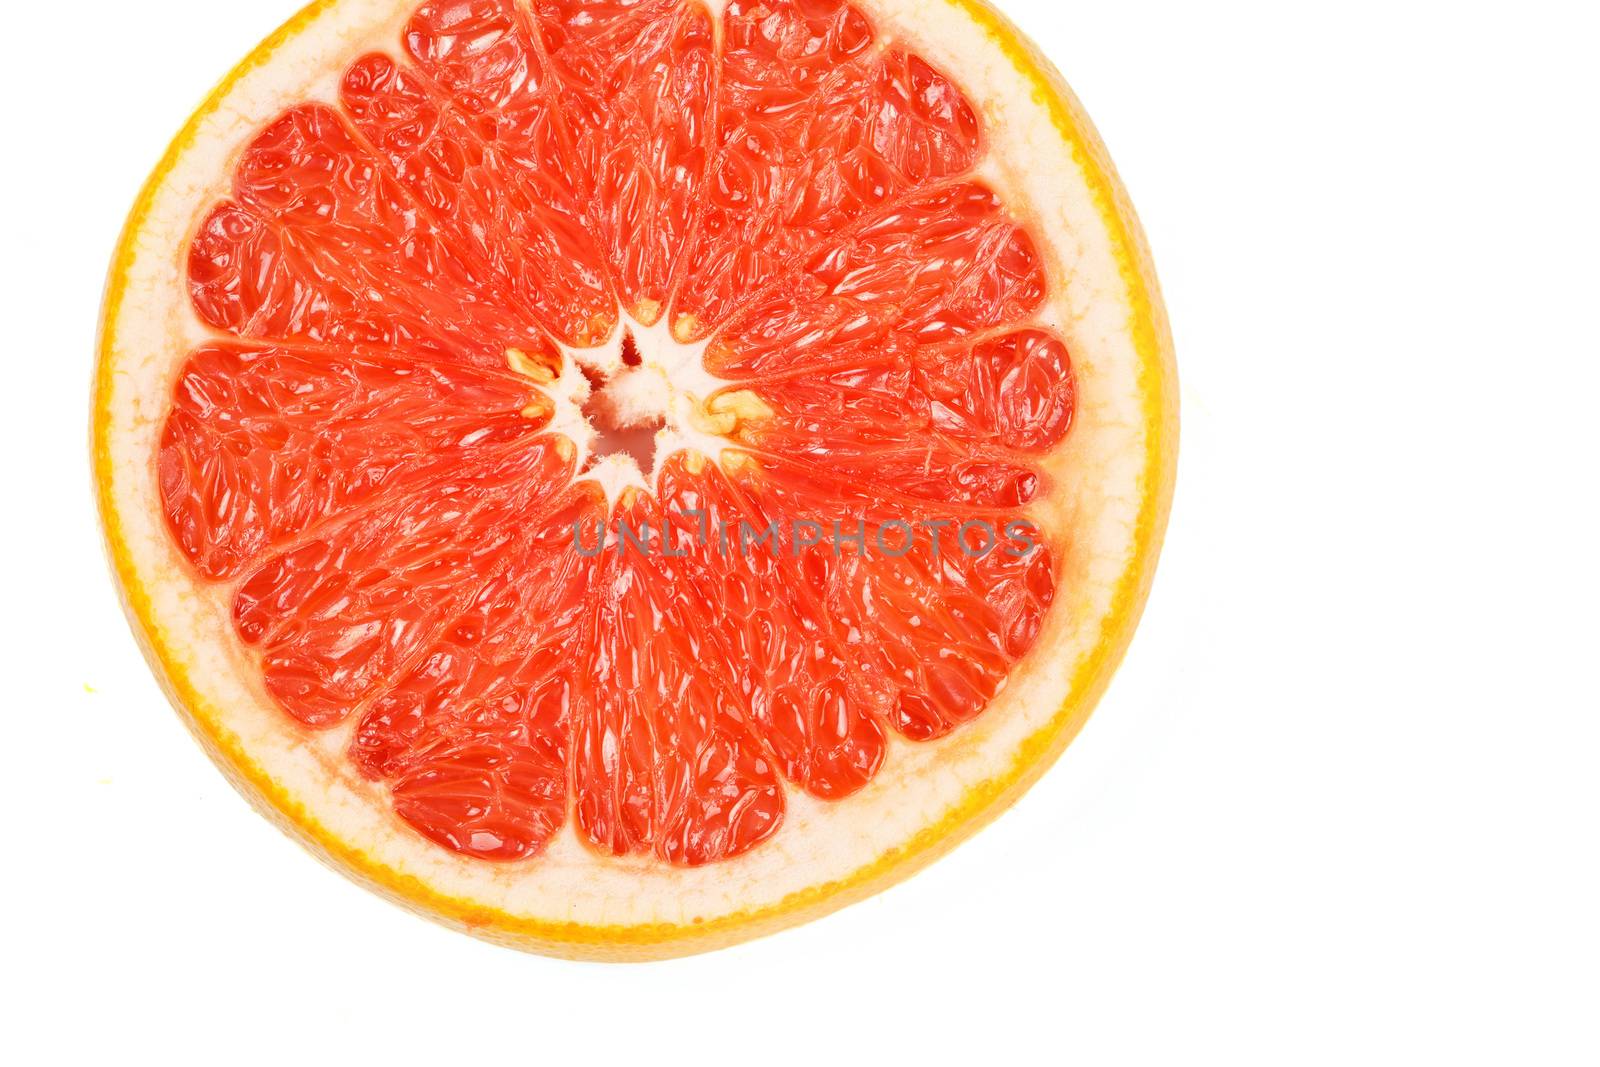 Slice a fresh juicy red round grapefruit